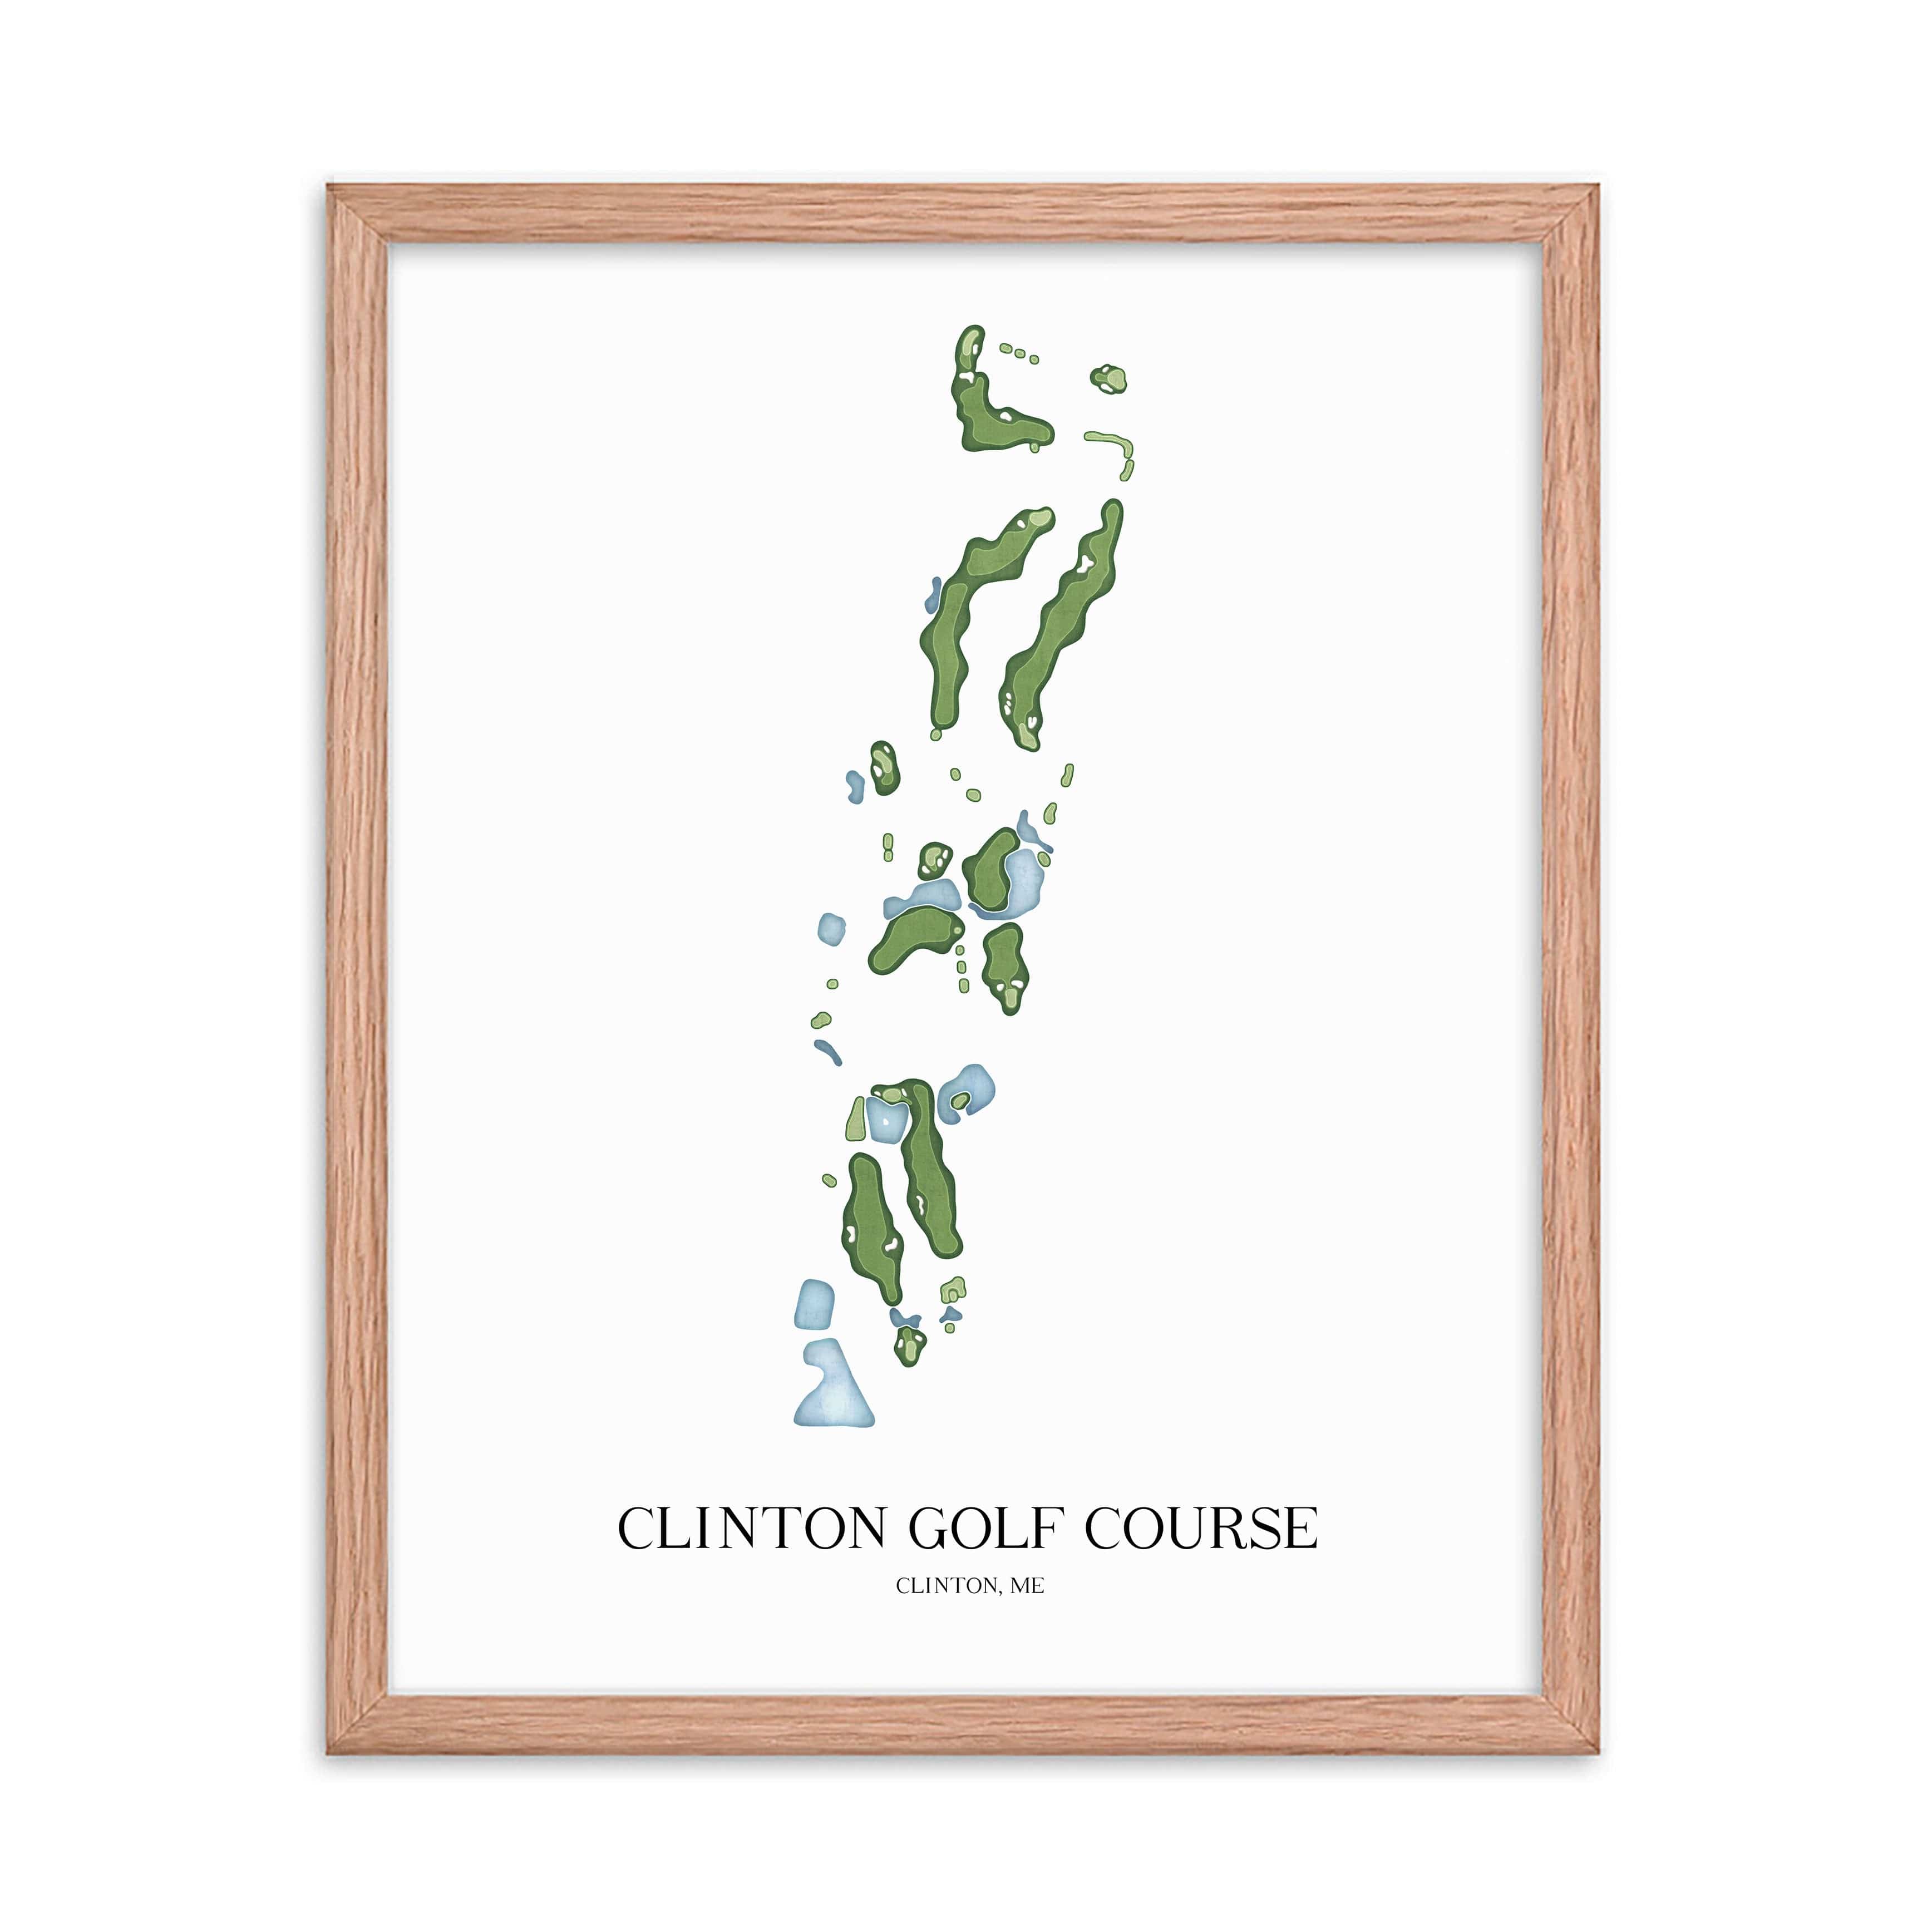 The 19th Hole Golf Shop - Golf Course Prints -  Clinton Golf Course Golf Course Map